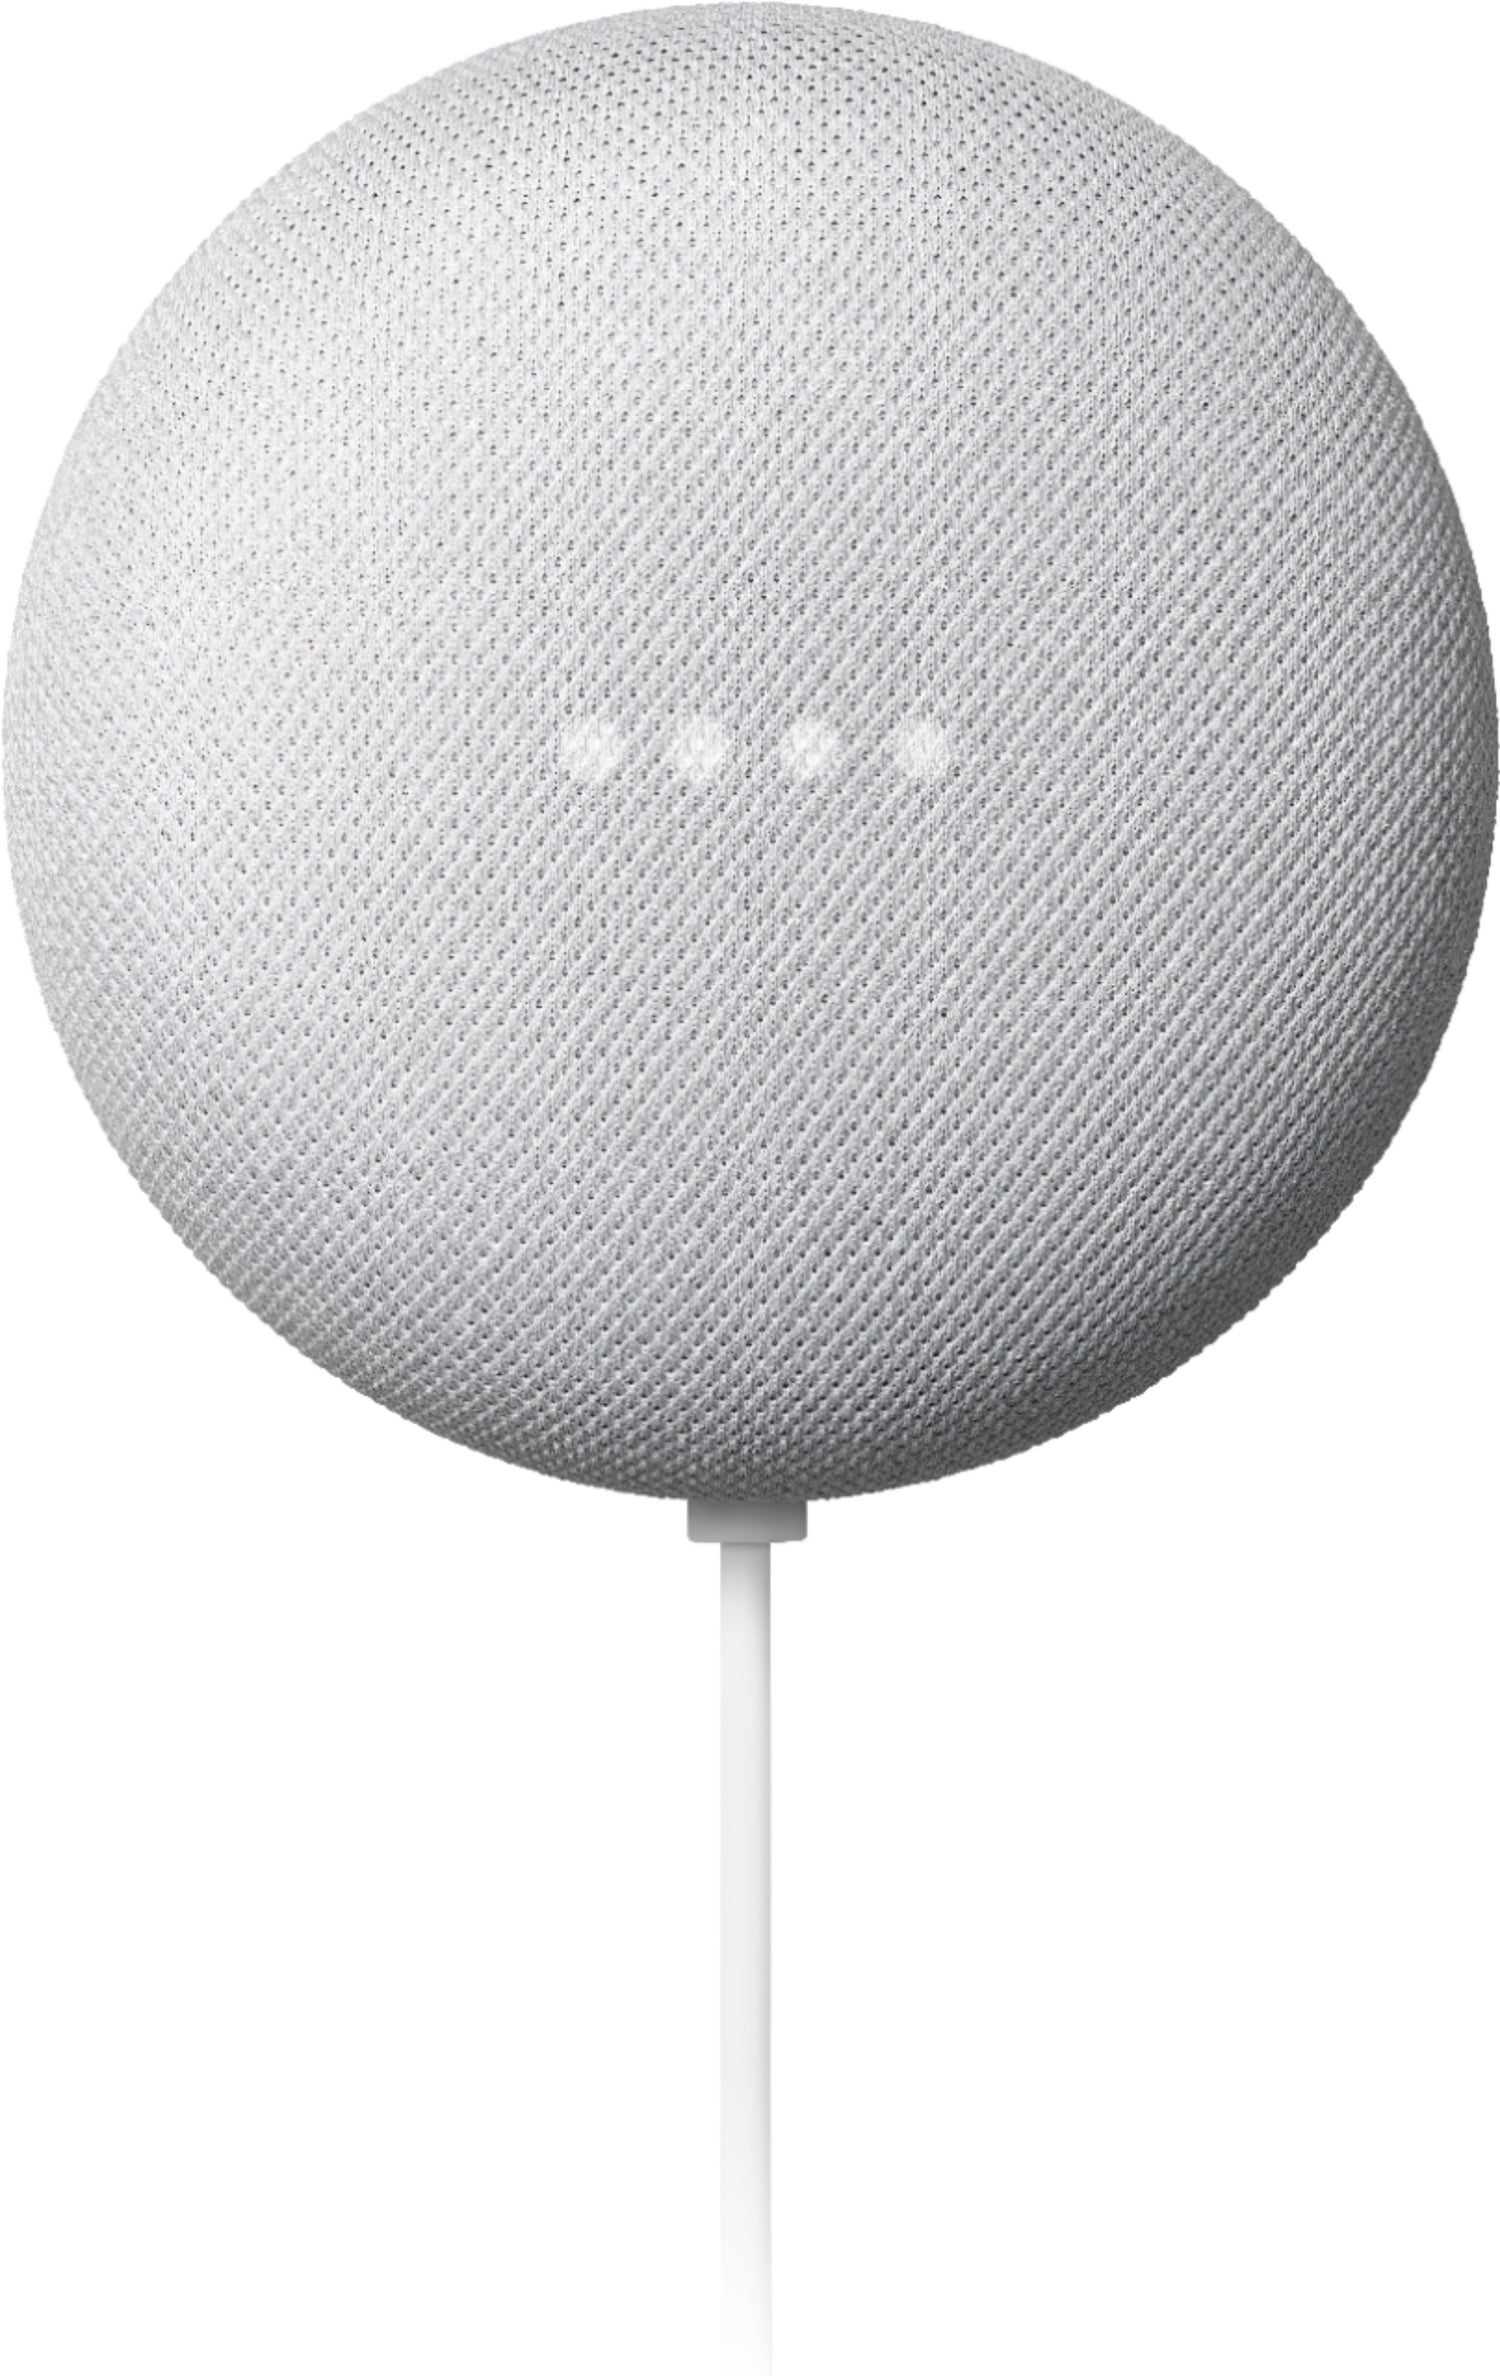 Google Nest Mini 2nd Generation Smart Speaker with Google Assistant - Chalk (Refurbished)